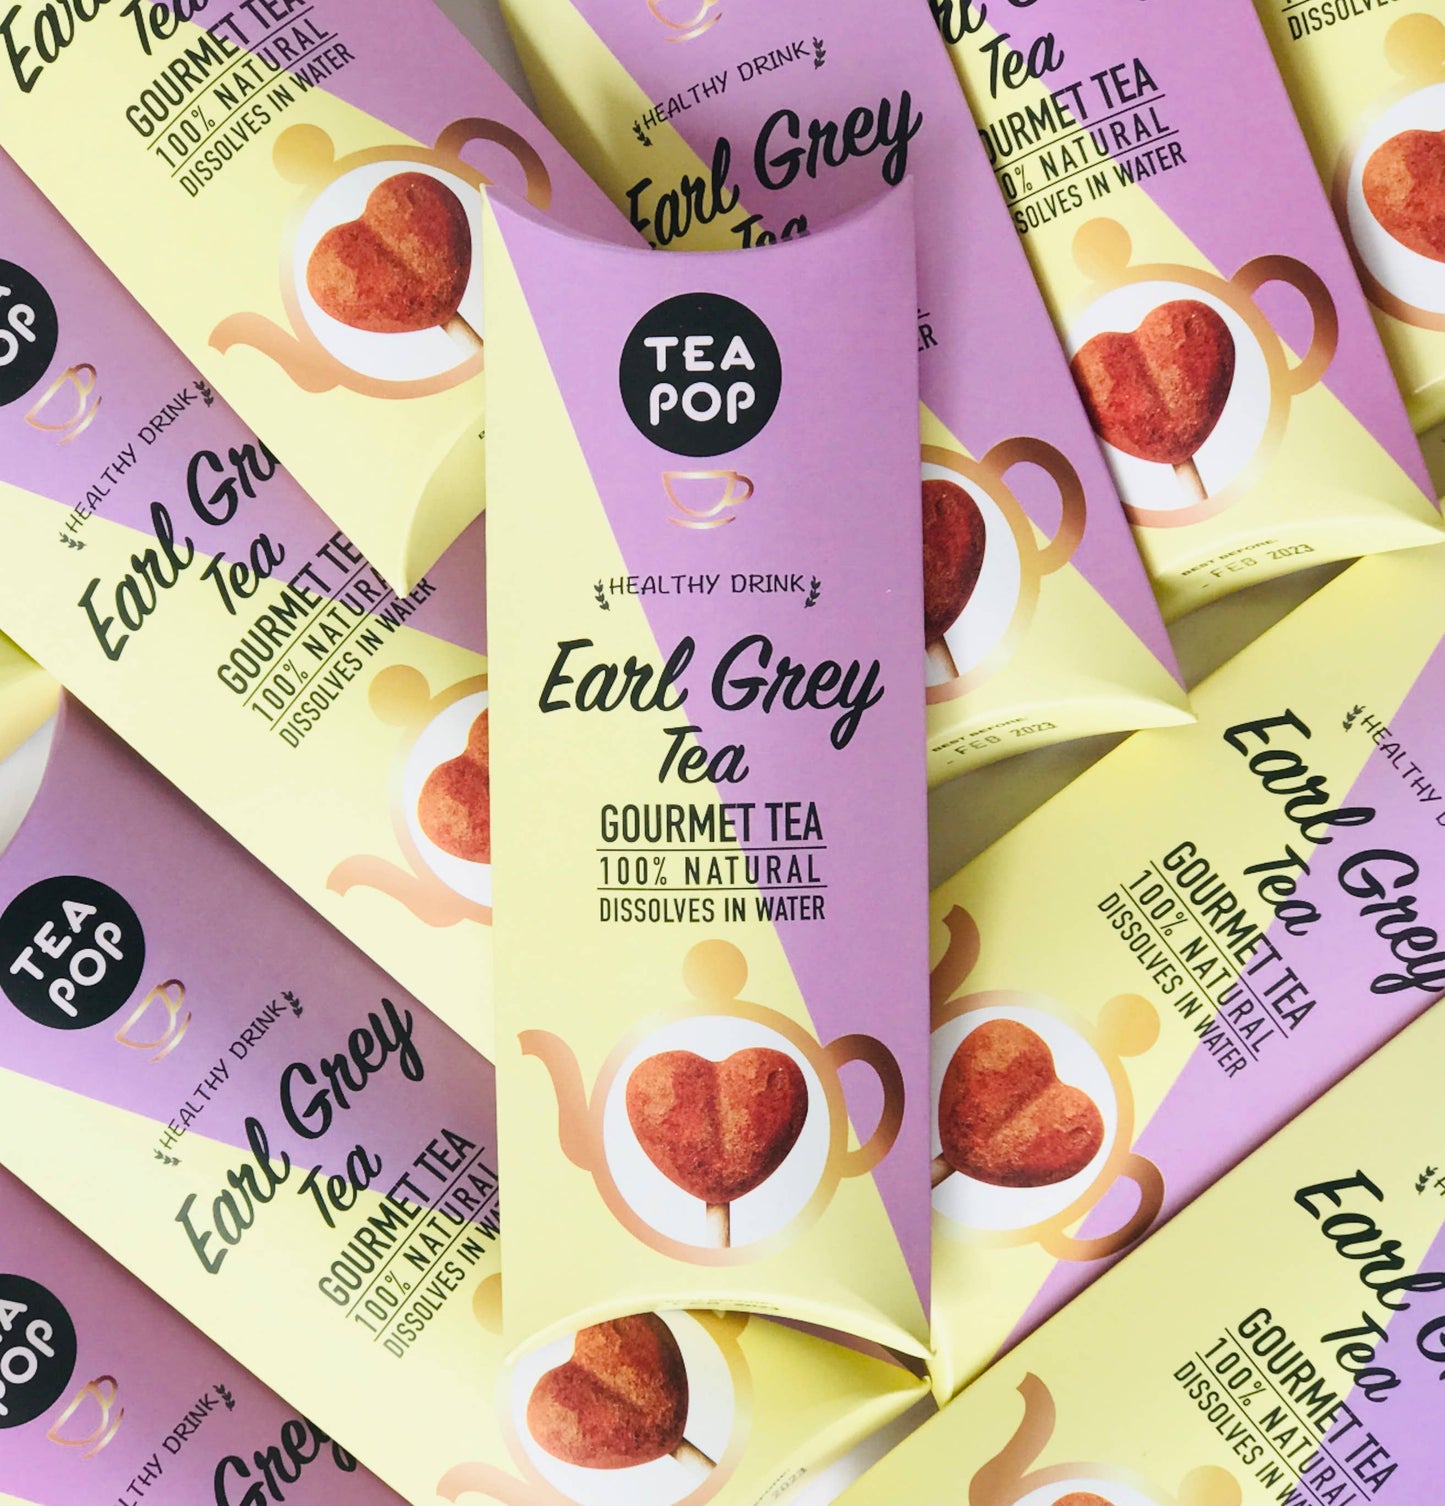 Earl Grey Gourmet TEA on-a-stick!